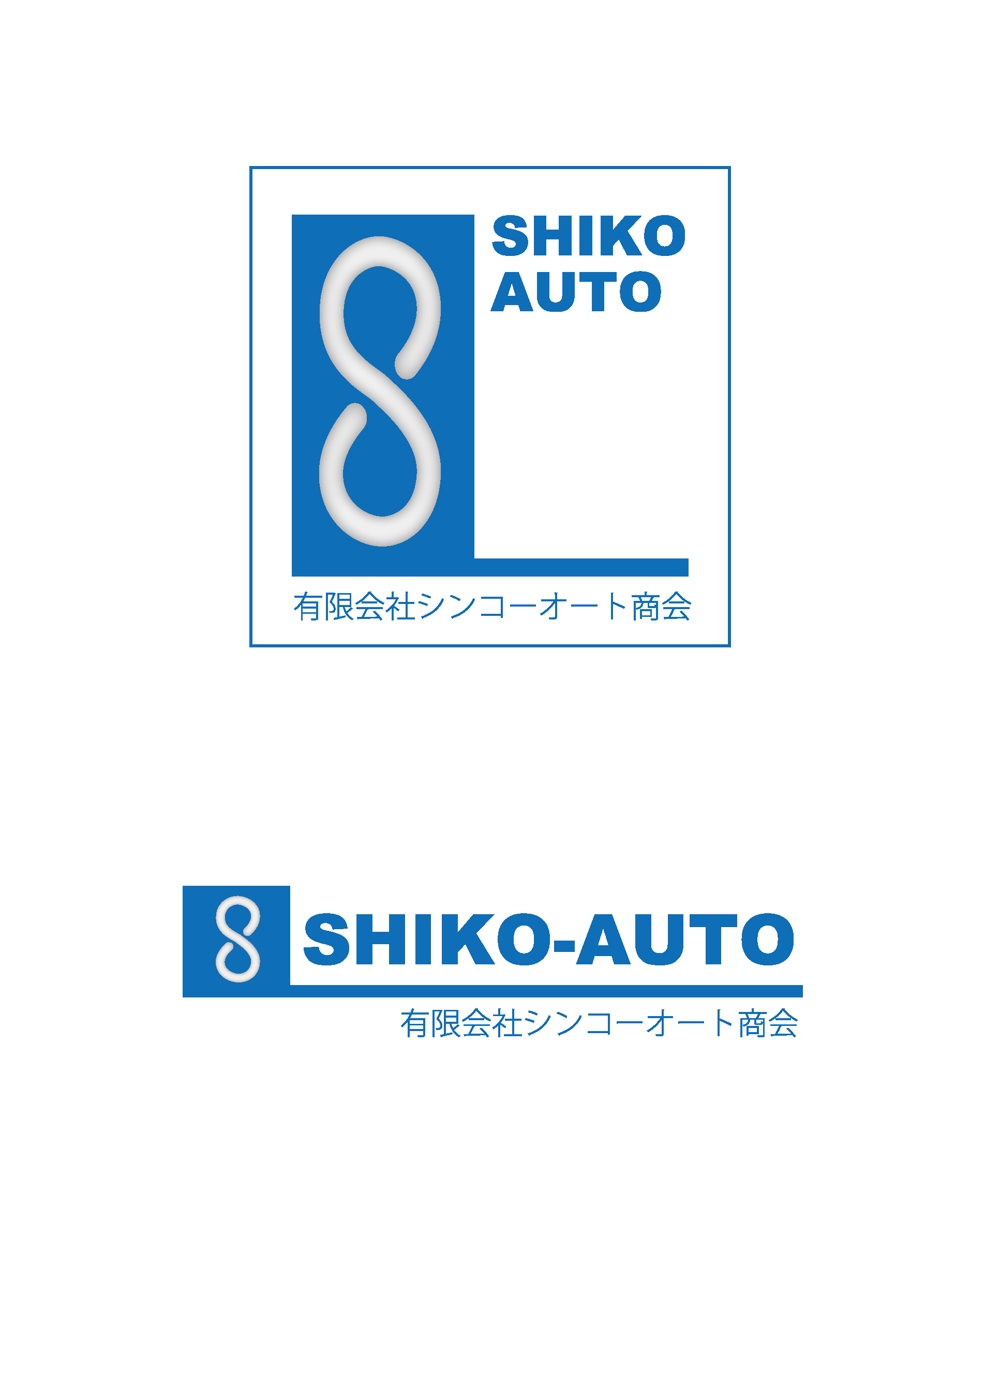 SHINKO-AUTO様01.jpg